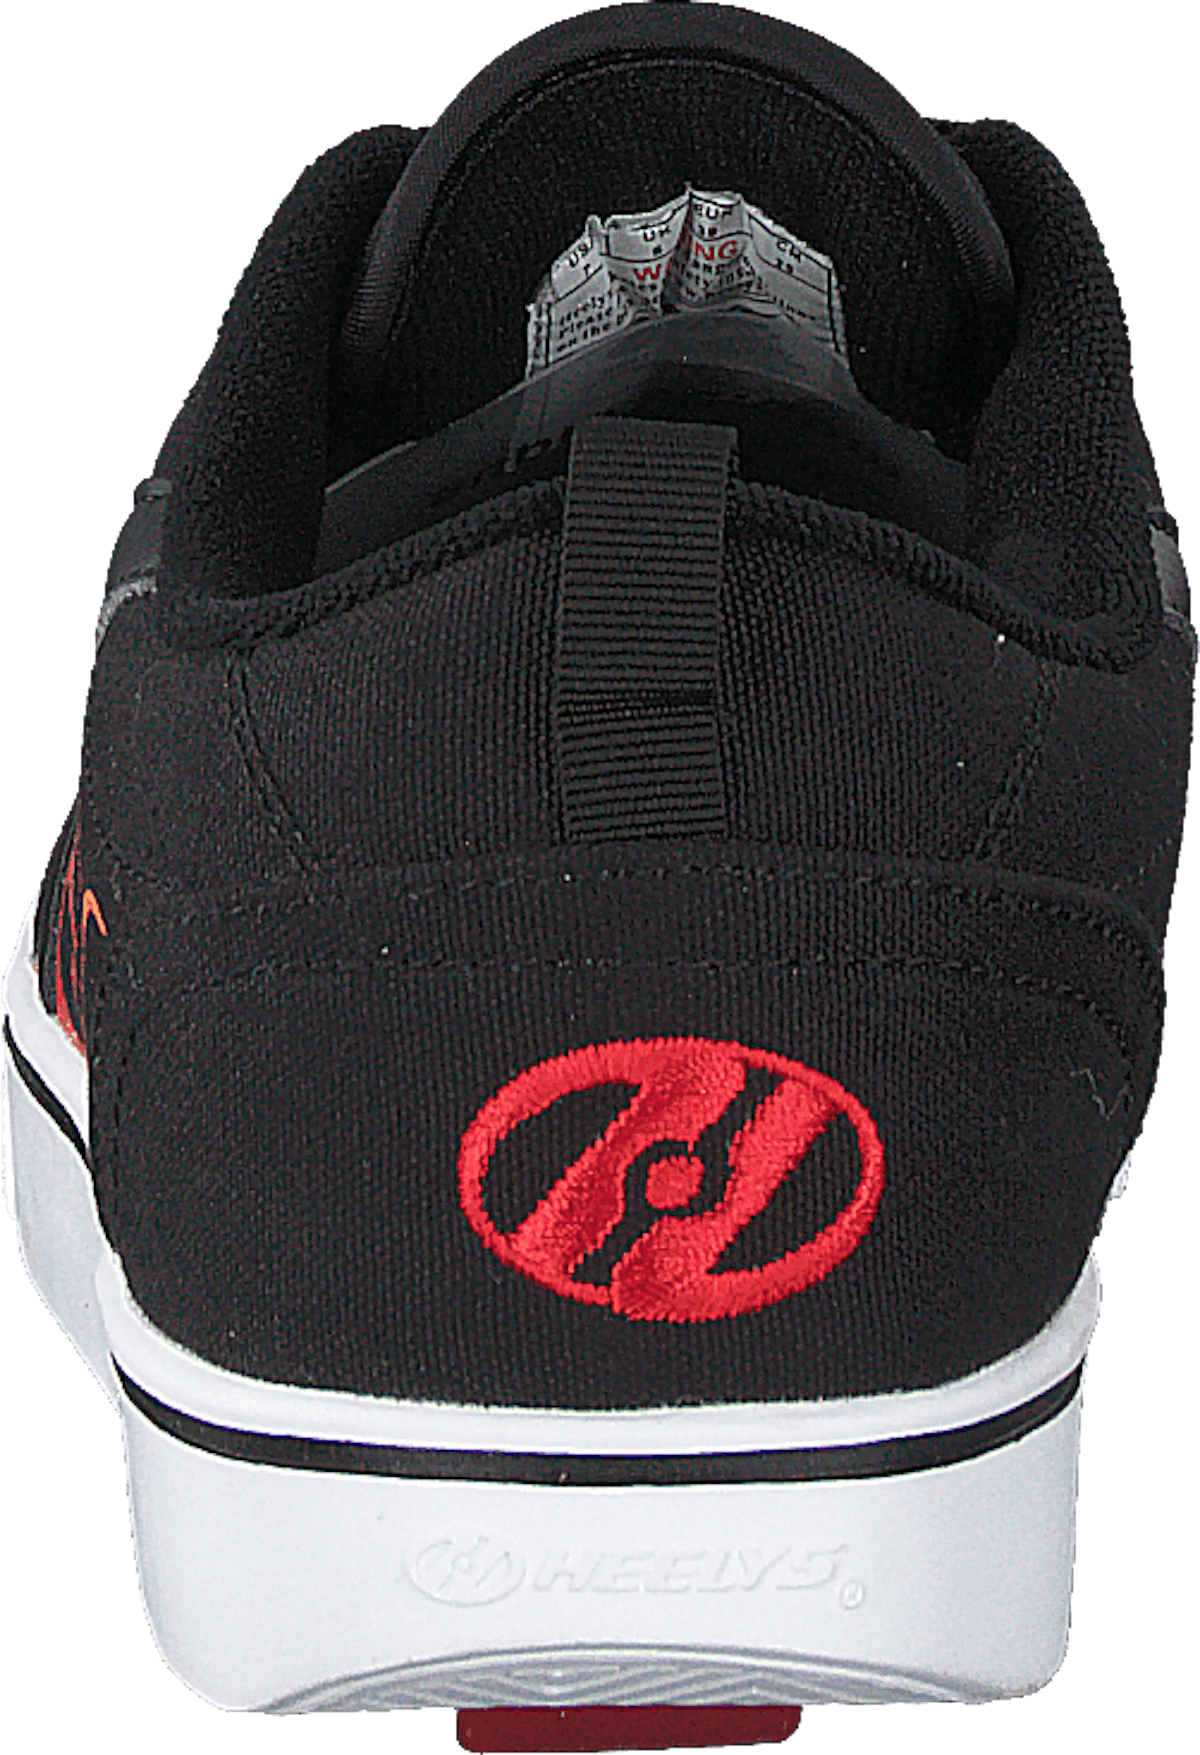 Heelys Gr8 Pro Black/red Flames